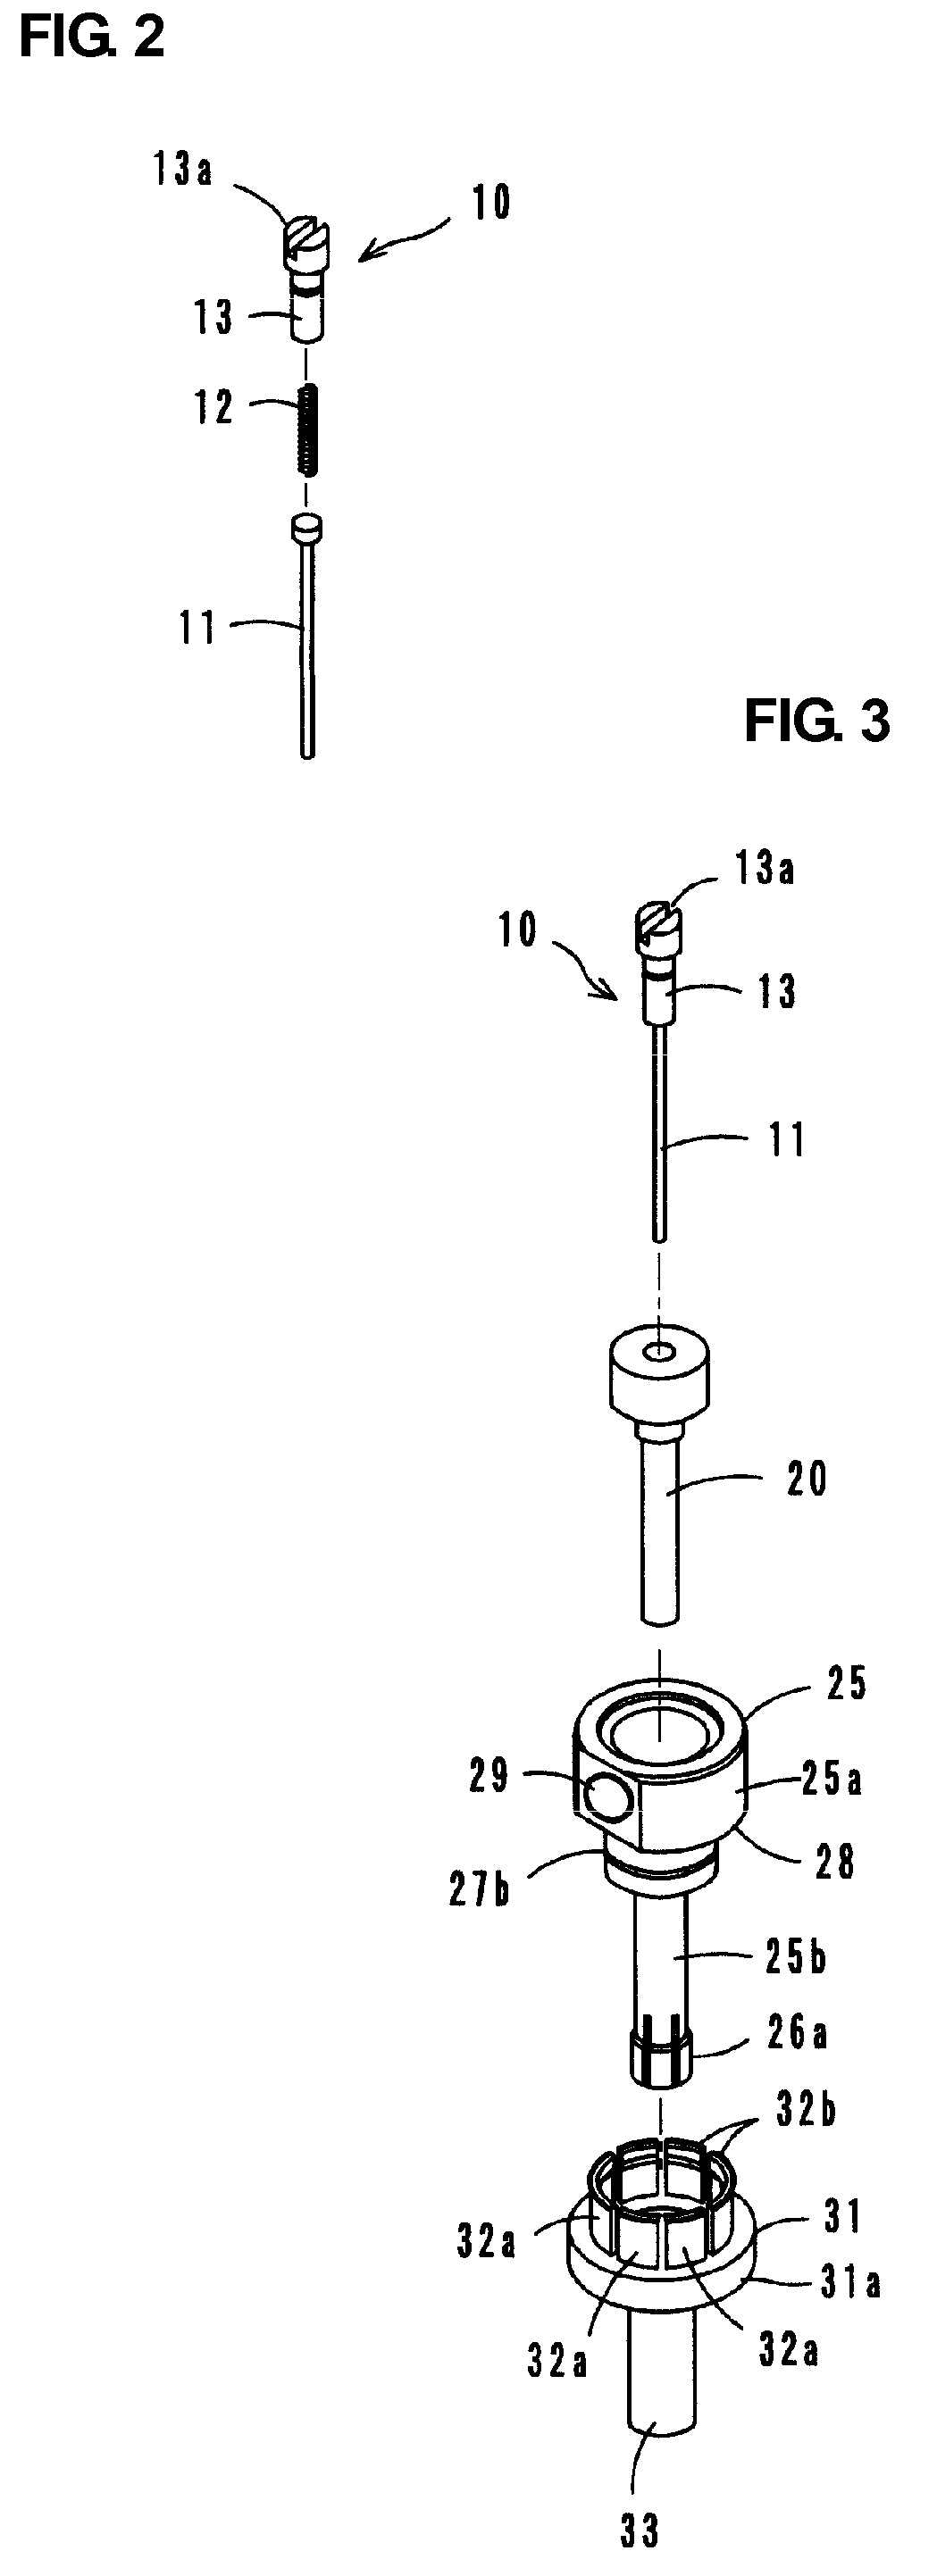 Coaxial connector and measuring coaxial probe